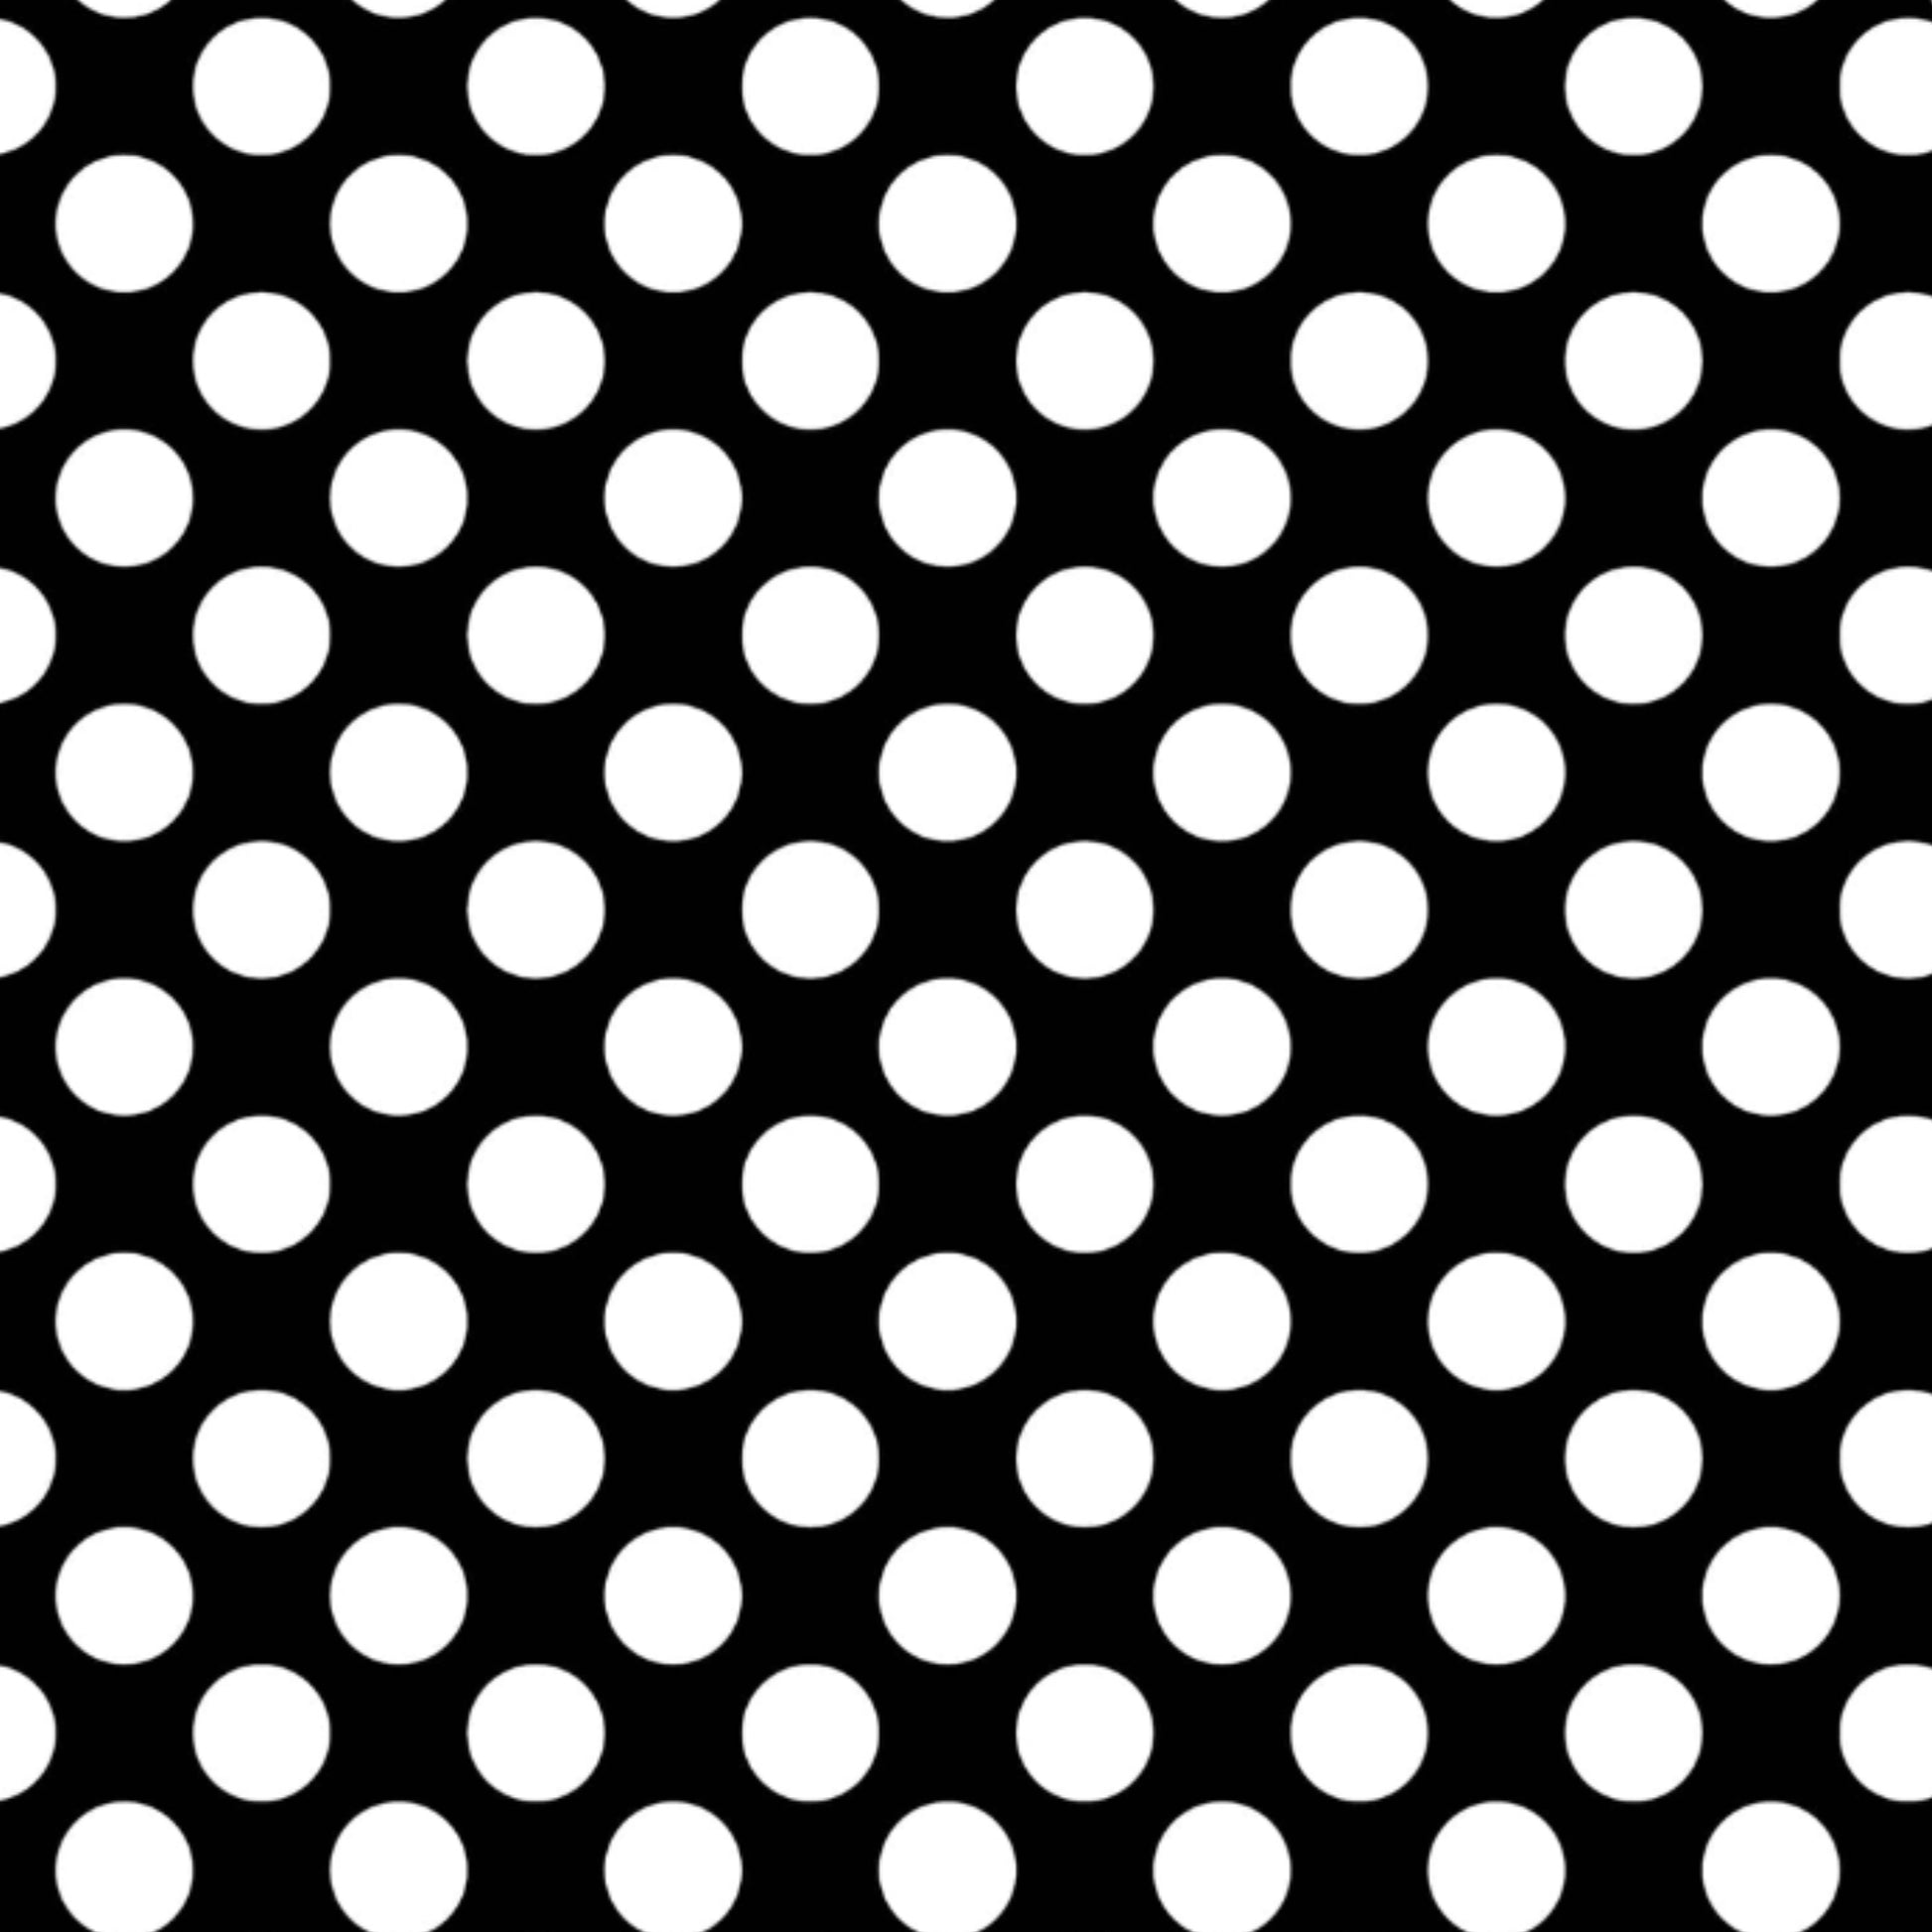 Spots-Anyone-Black-&-White-Monochrome-Polka-Dot-Mod-Retro-Vintage-Inspired-RainbowsAndFairies.com.au-SPOTS_ORG-01